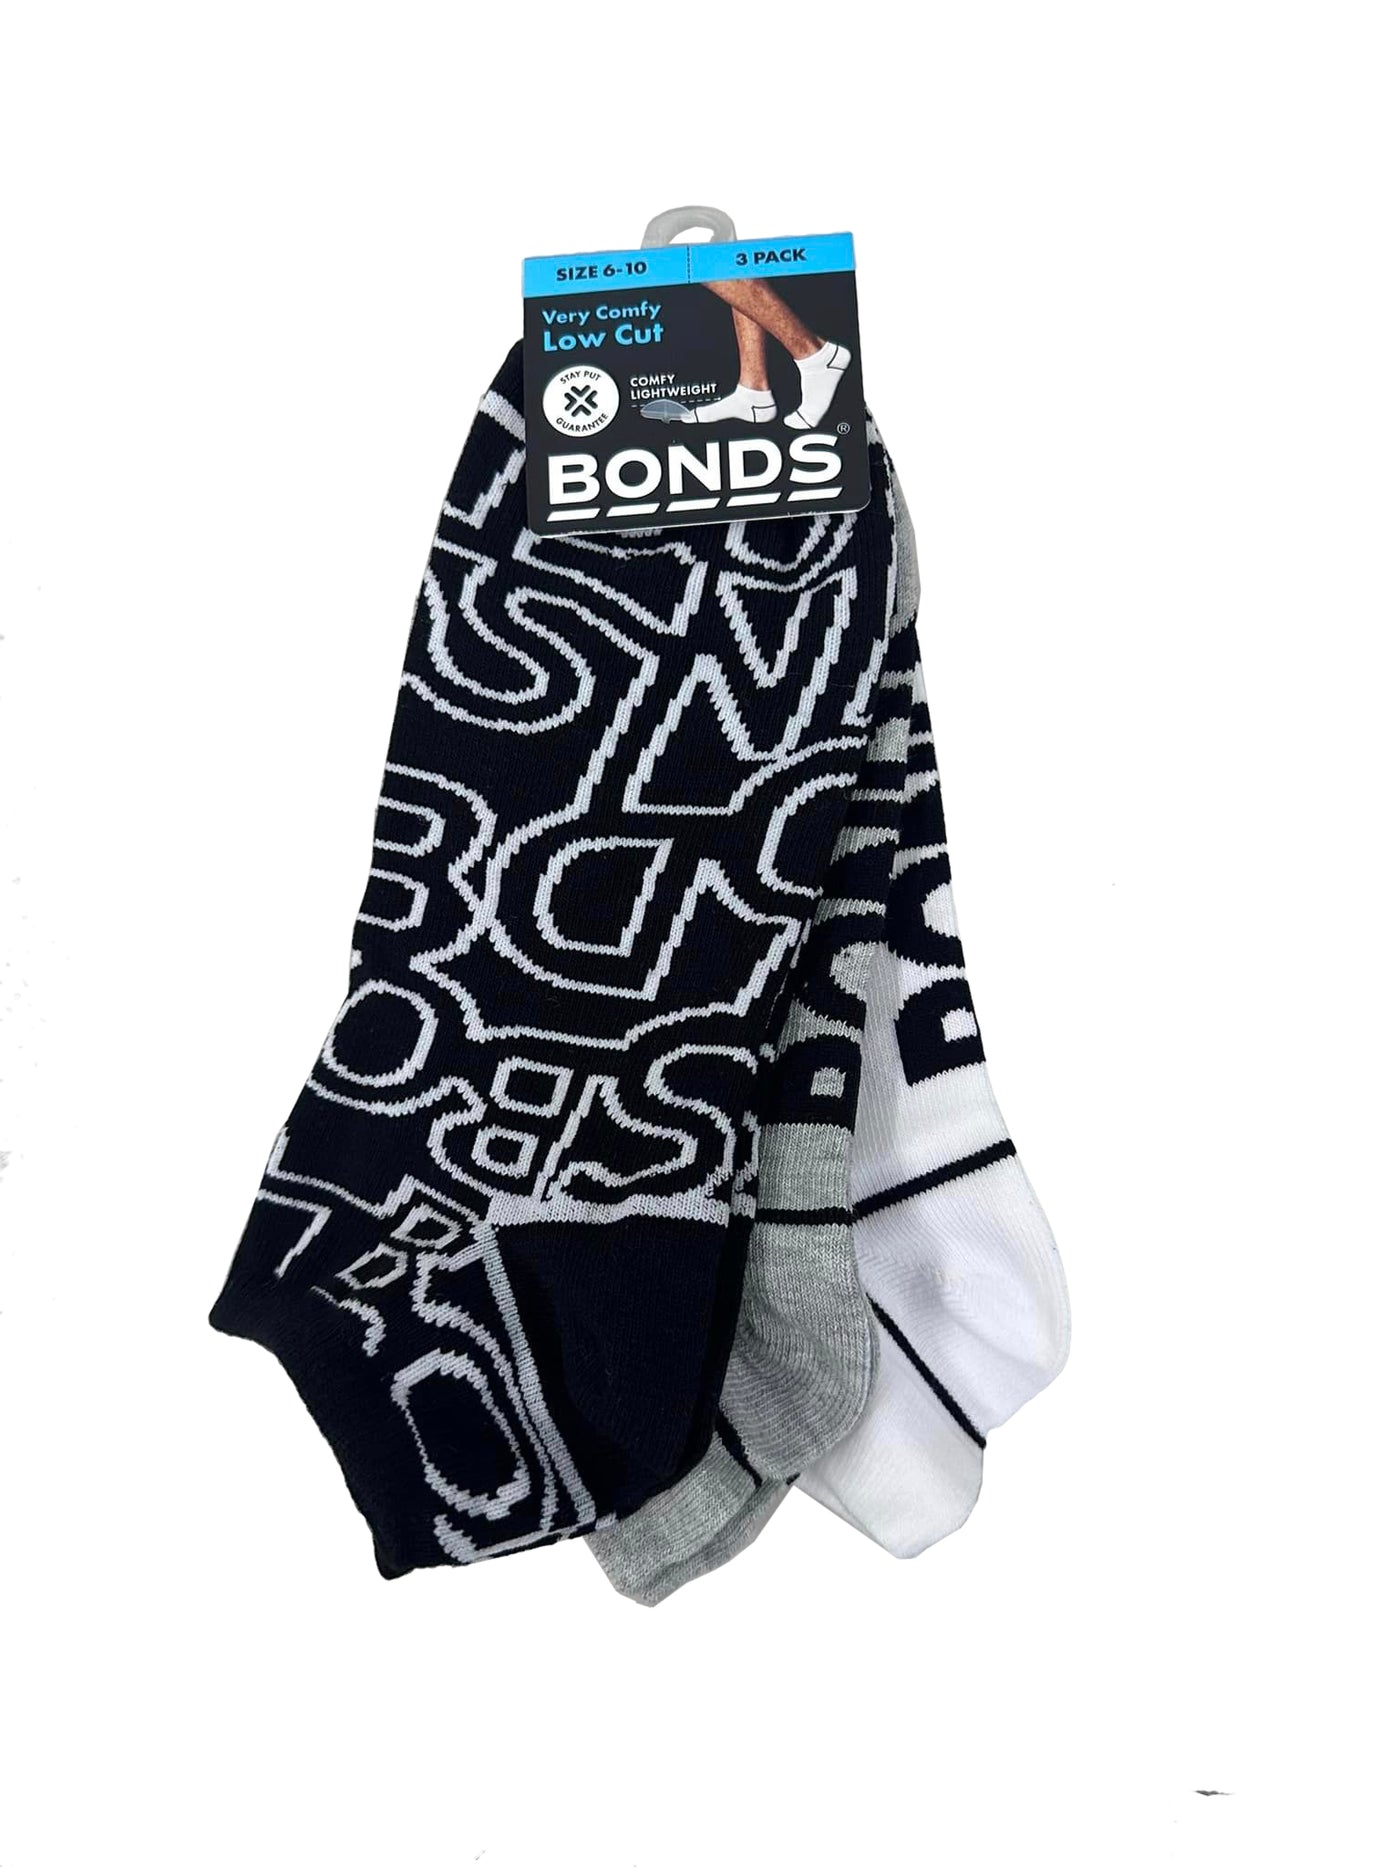 Bonds Mens Fashion Trainers Low Cut Socks 3 Pack - Black/Grey/White